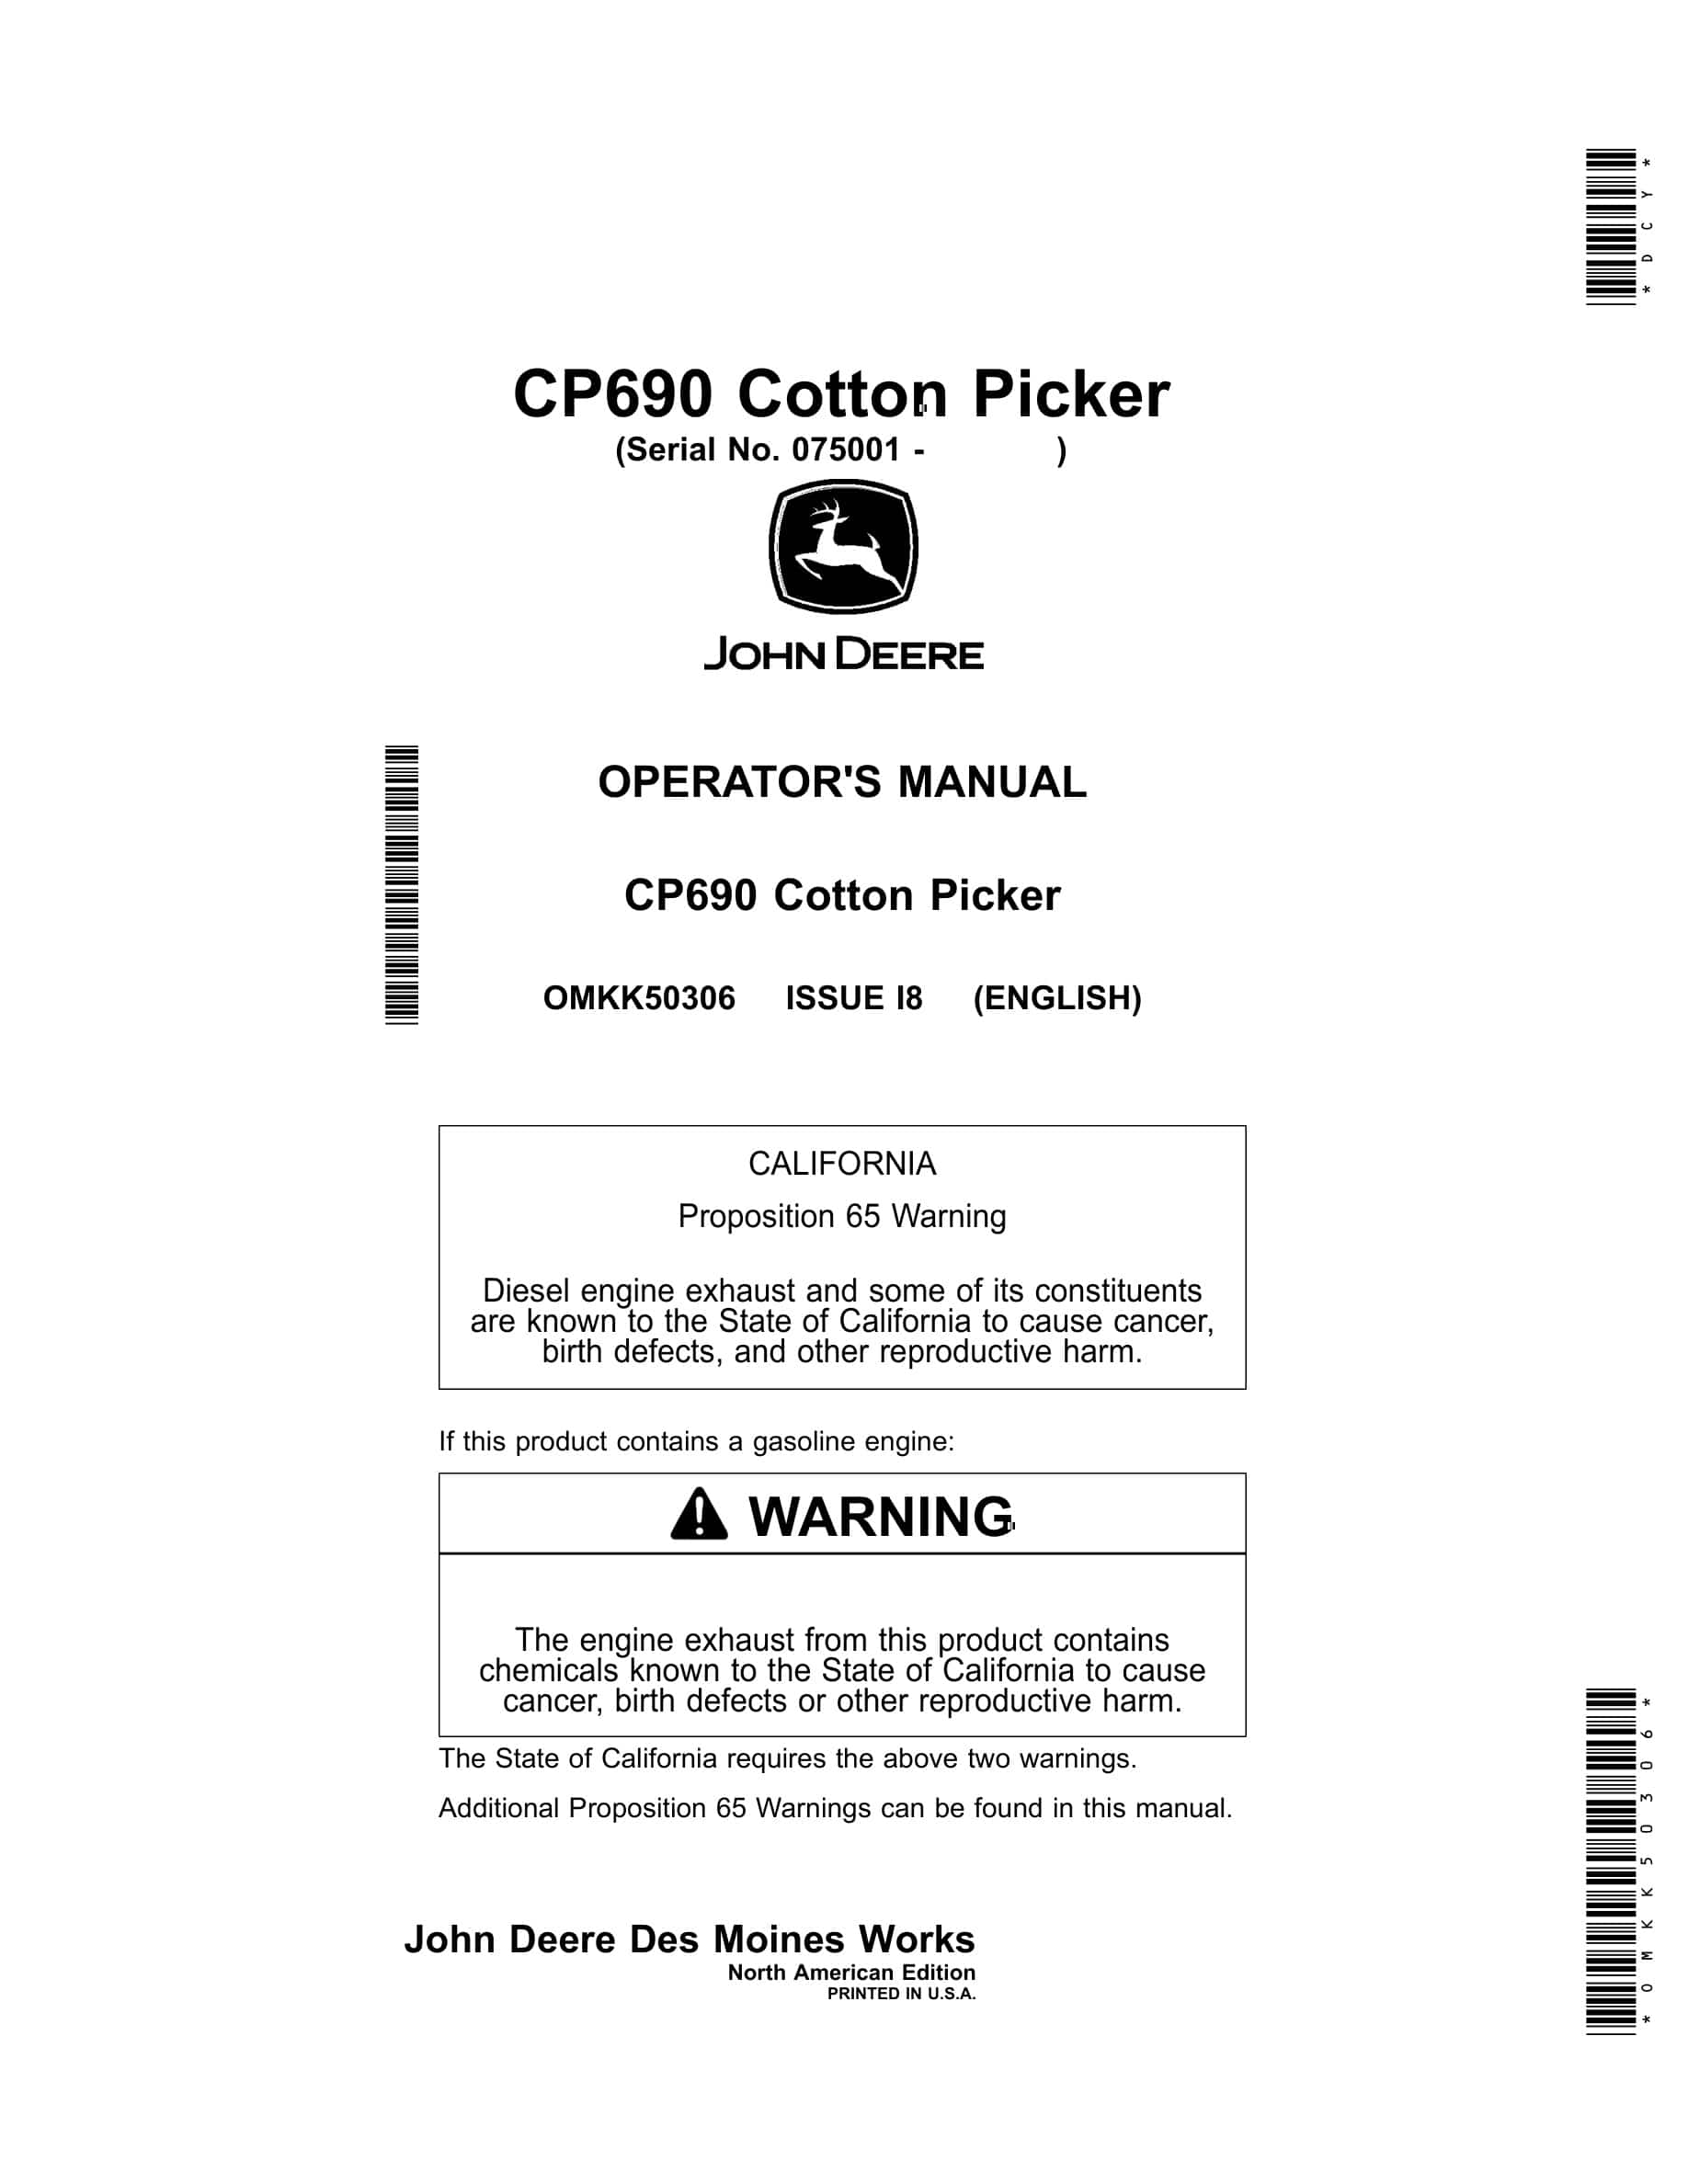 John Deere CP690 Cotton Picker Operator Manual OMKK50306-1